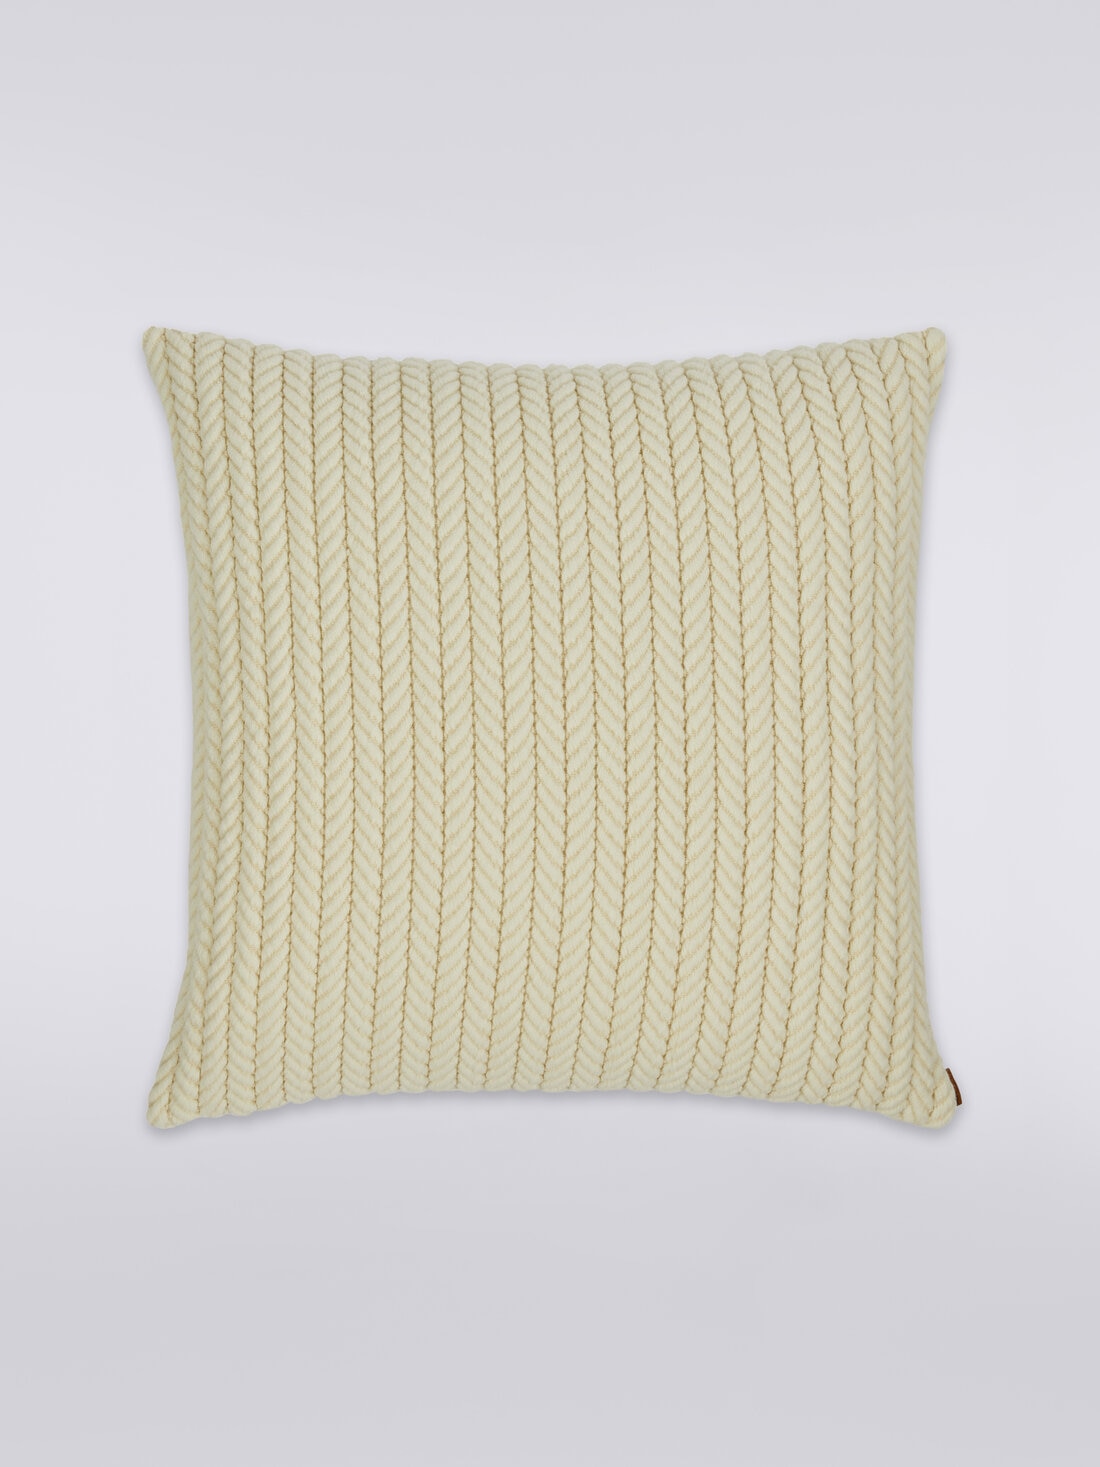 Bern cushion 50x50 cm, Multicoloured  - 8051275581185 - 0